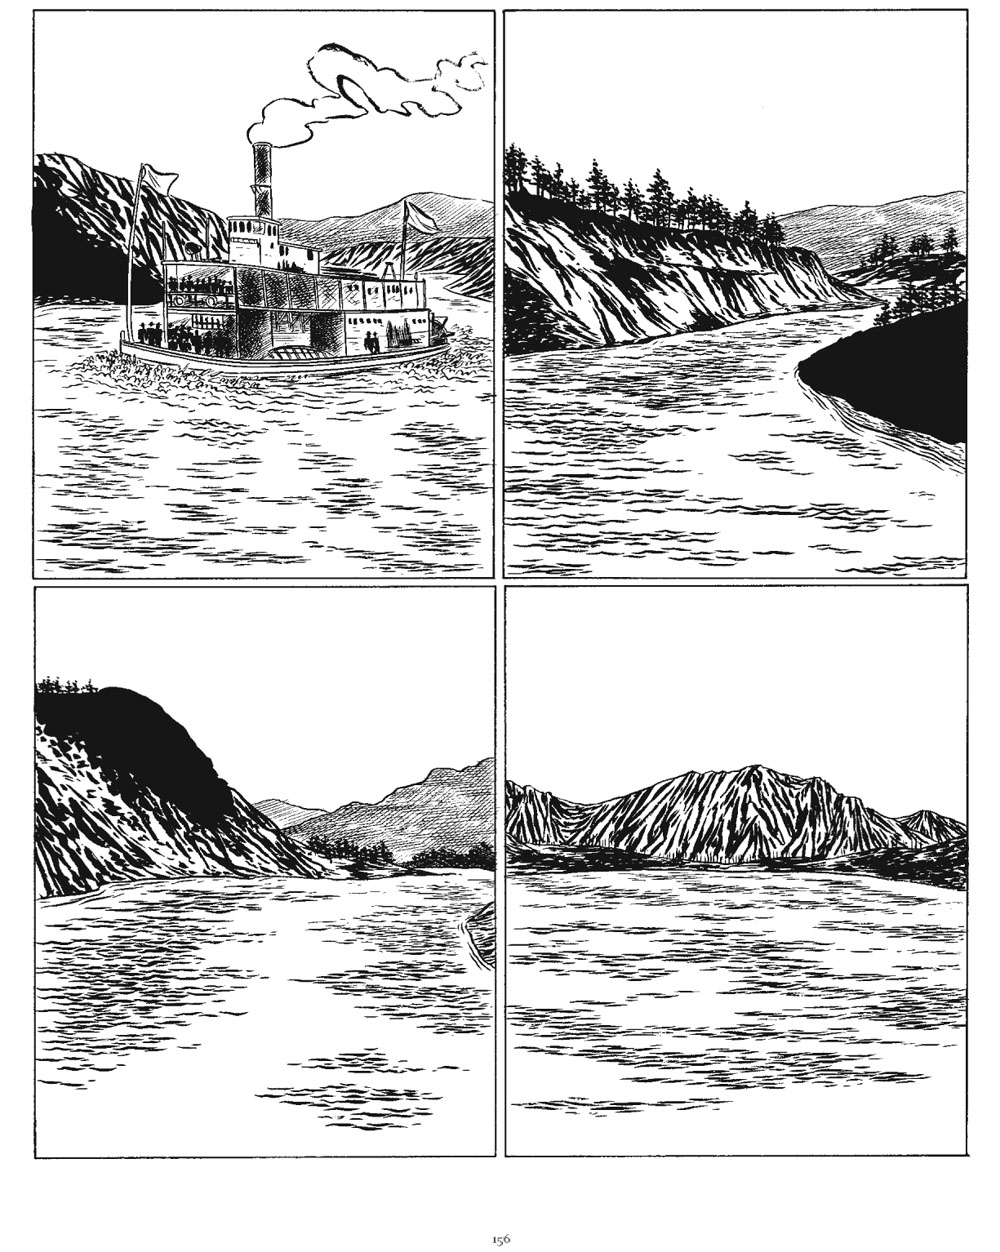 The Klondike Page 156